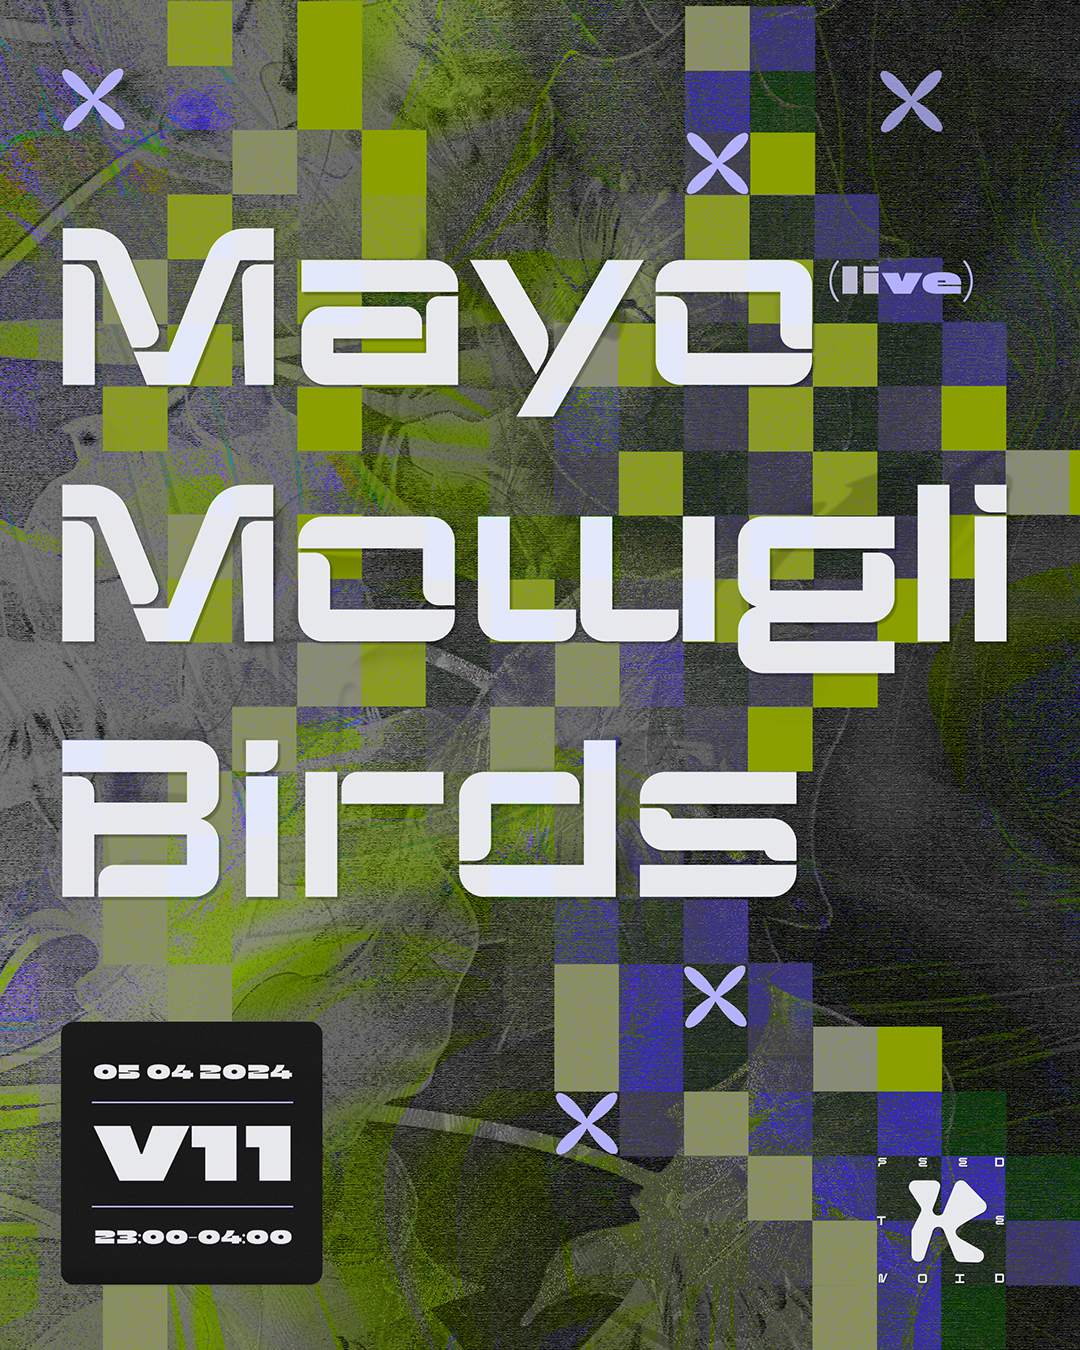 Feed The Void: Mayo (Live), Mowgli, Birds - フライヤー表